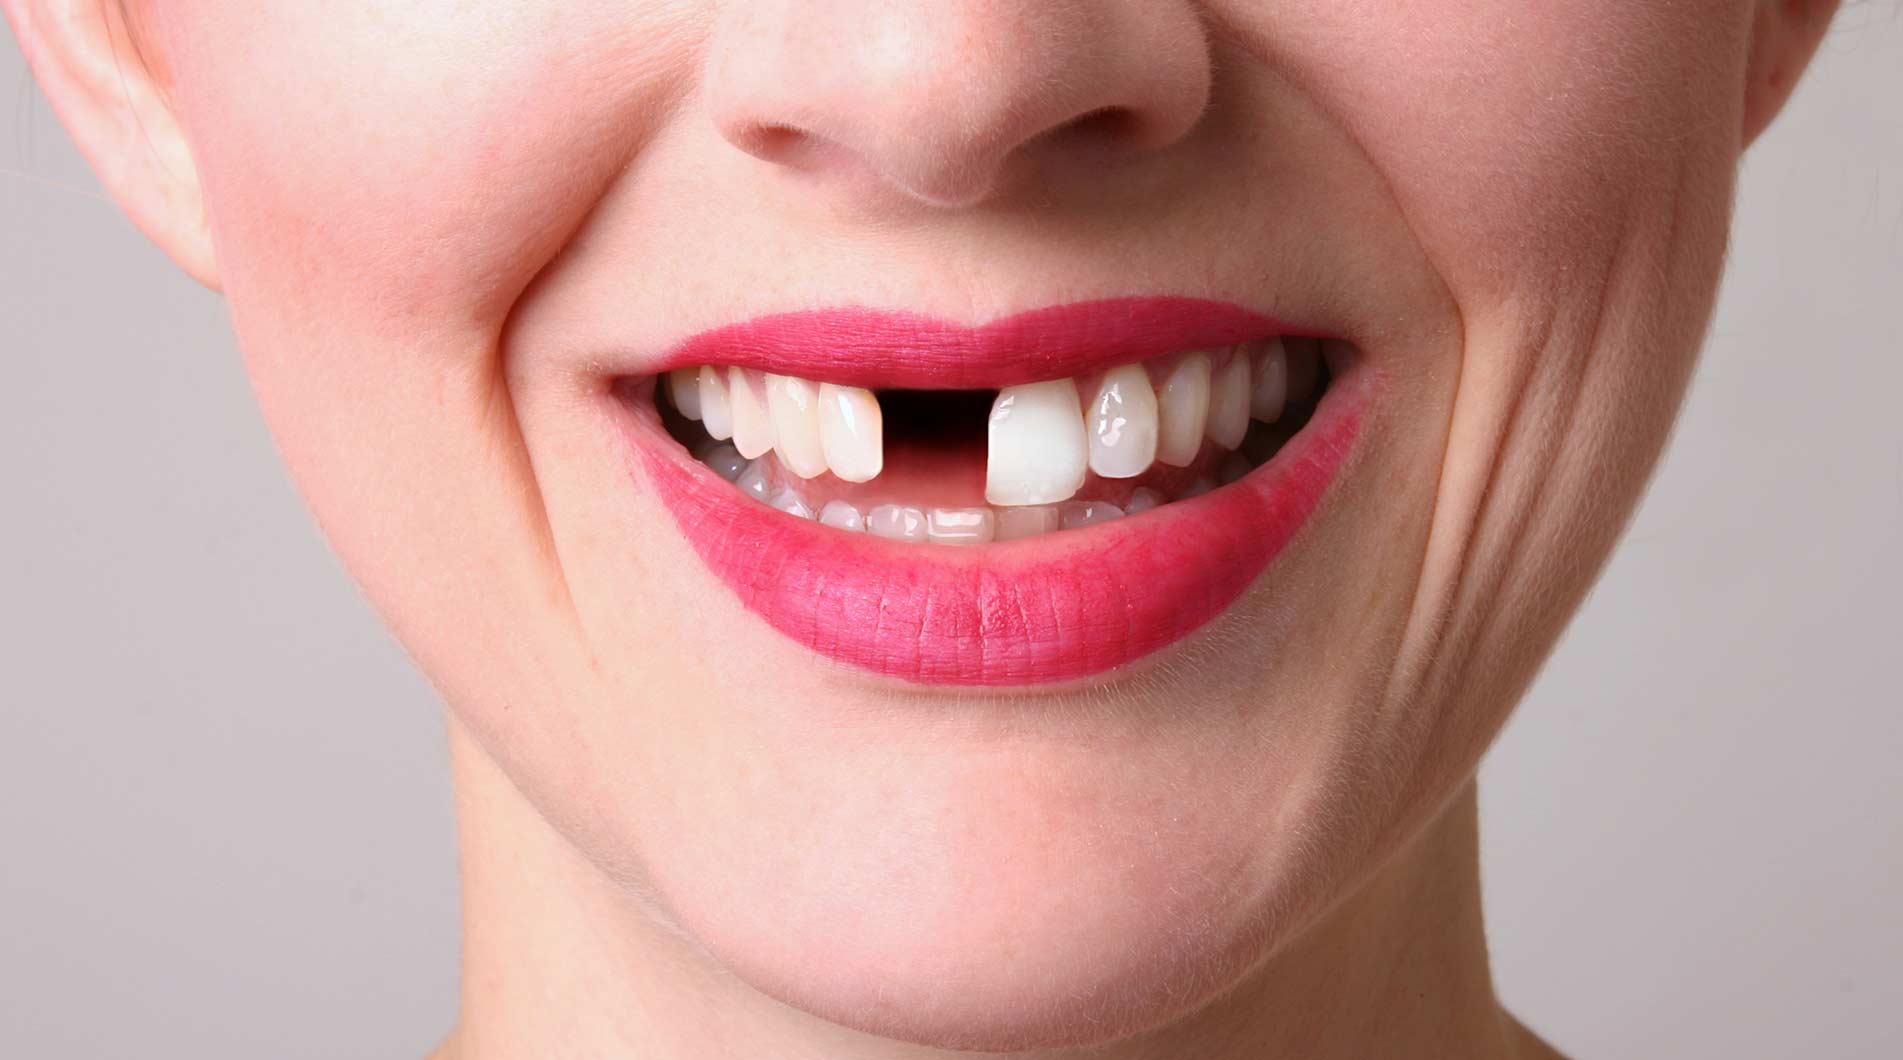 Fix your missing teeth at Dental at Joondalup